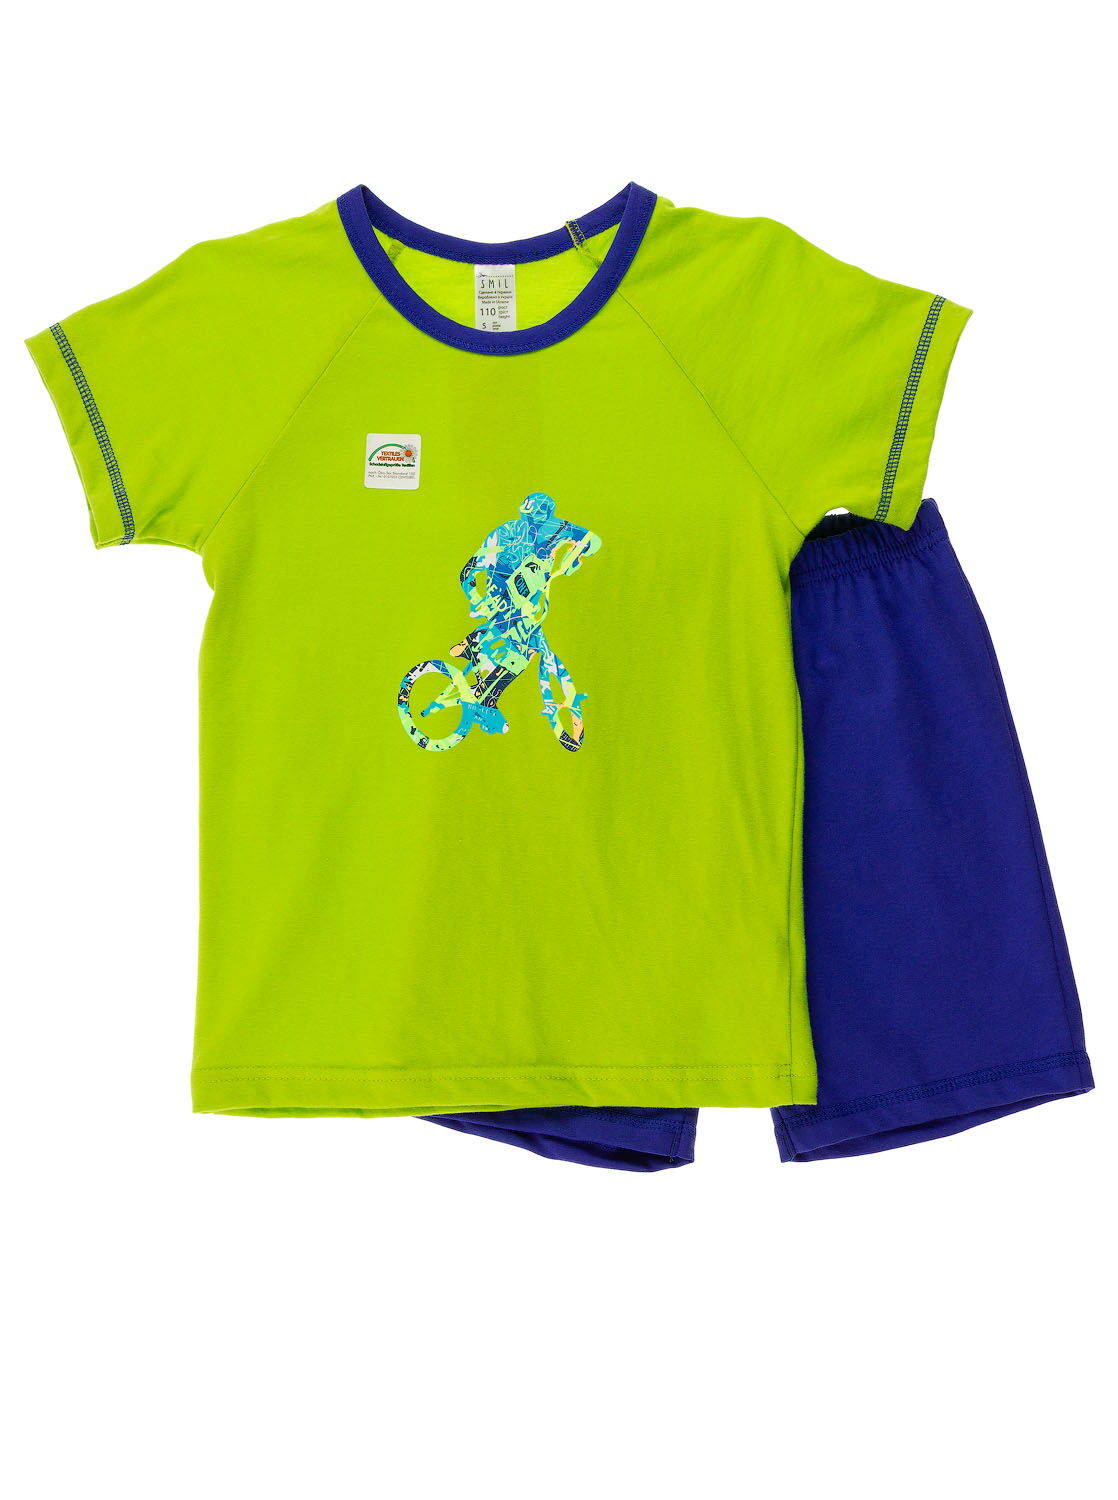 Пижама для мальчика (футболка+шорты) SMIL зеленая 104391 - цена